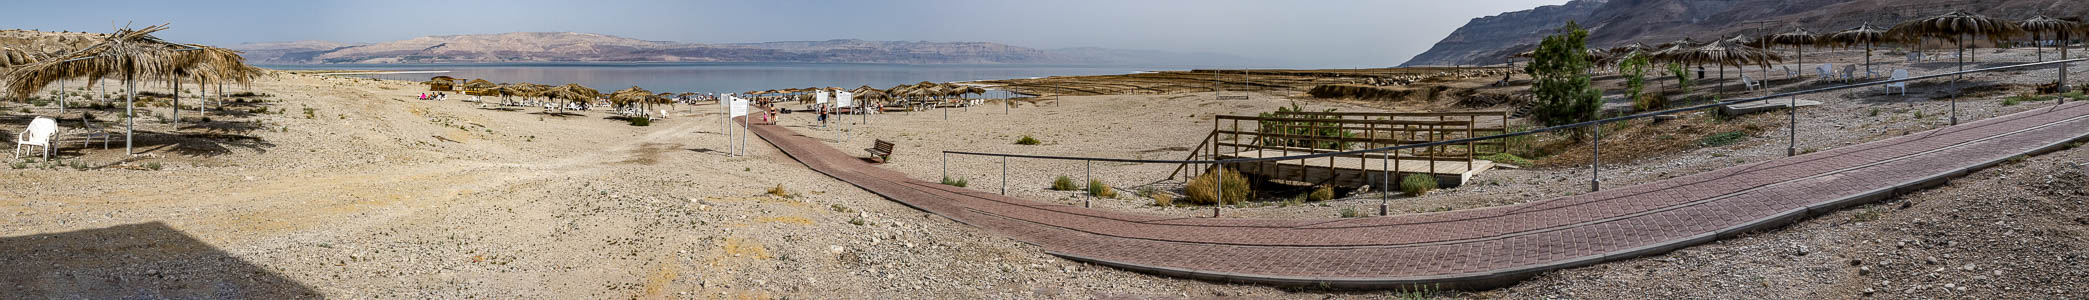 Strand, Totes Meer, Jordanien Mineral Beach